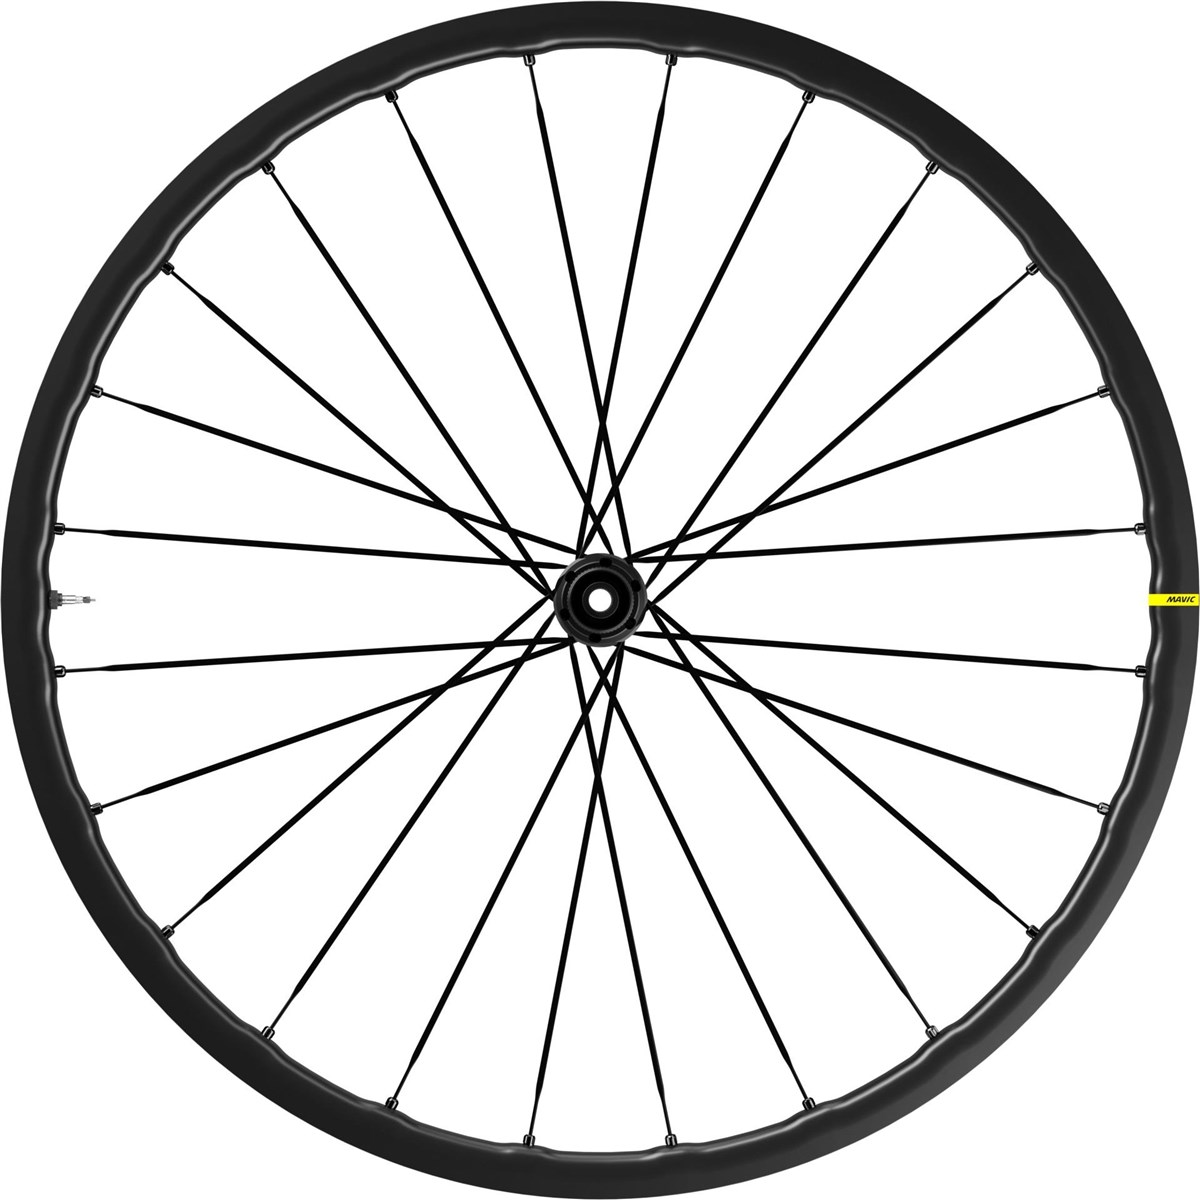 Mavic Ksyrium SL Disc Rear Wheel product image